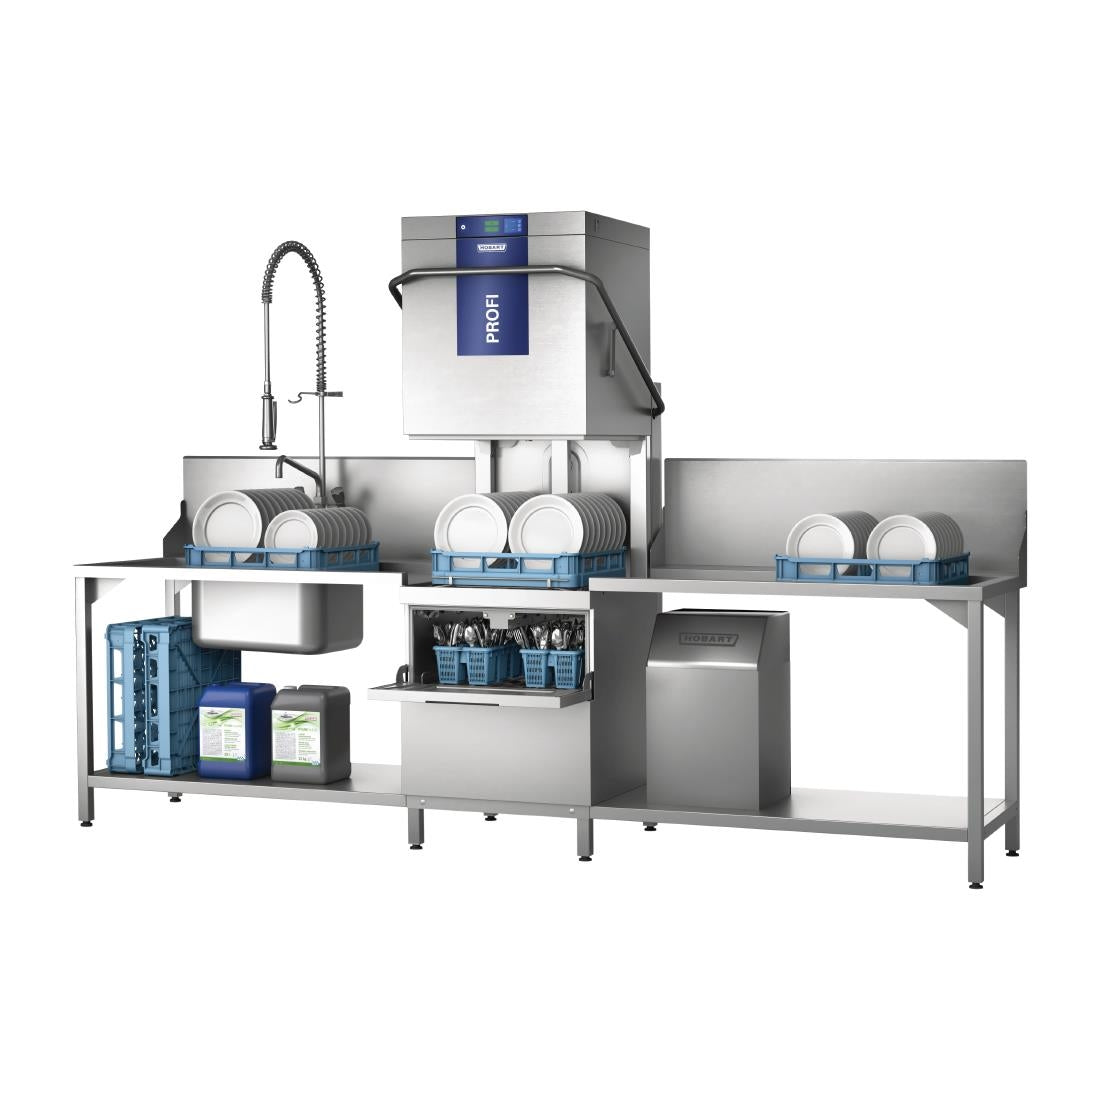 FE666 Hobart Profi Dual Level Pass Through Dishwasher TLWW-10A JD Catering Equipment Solutions Ltd